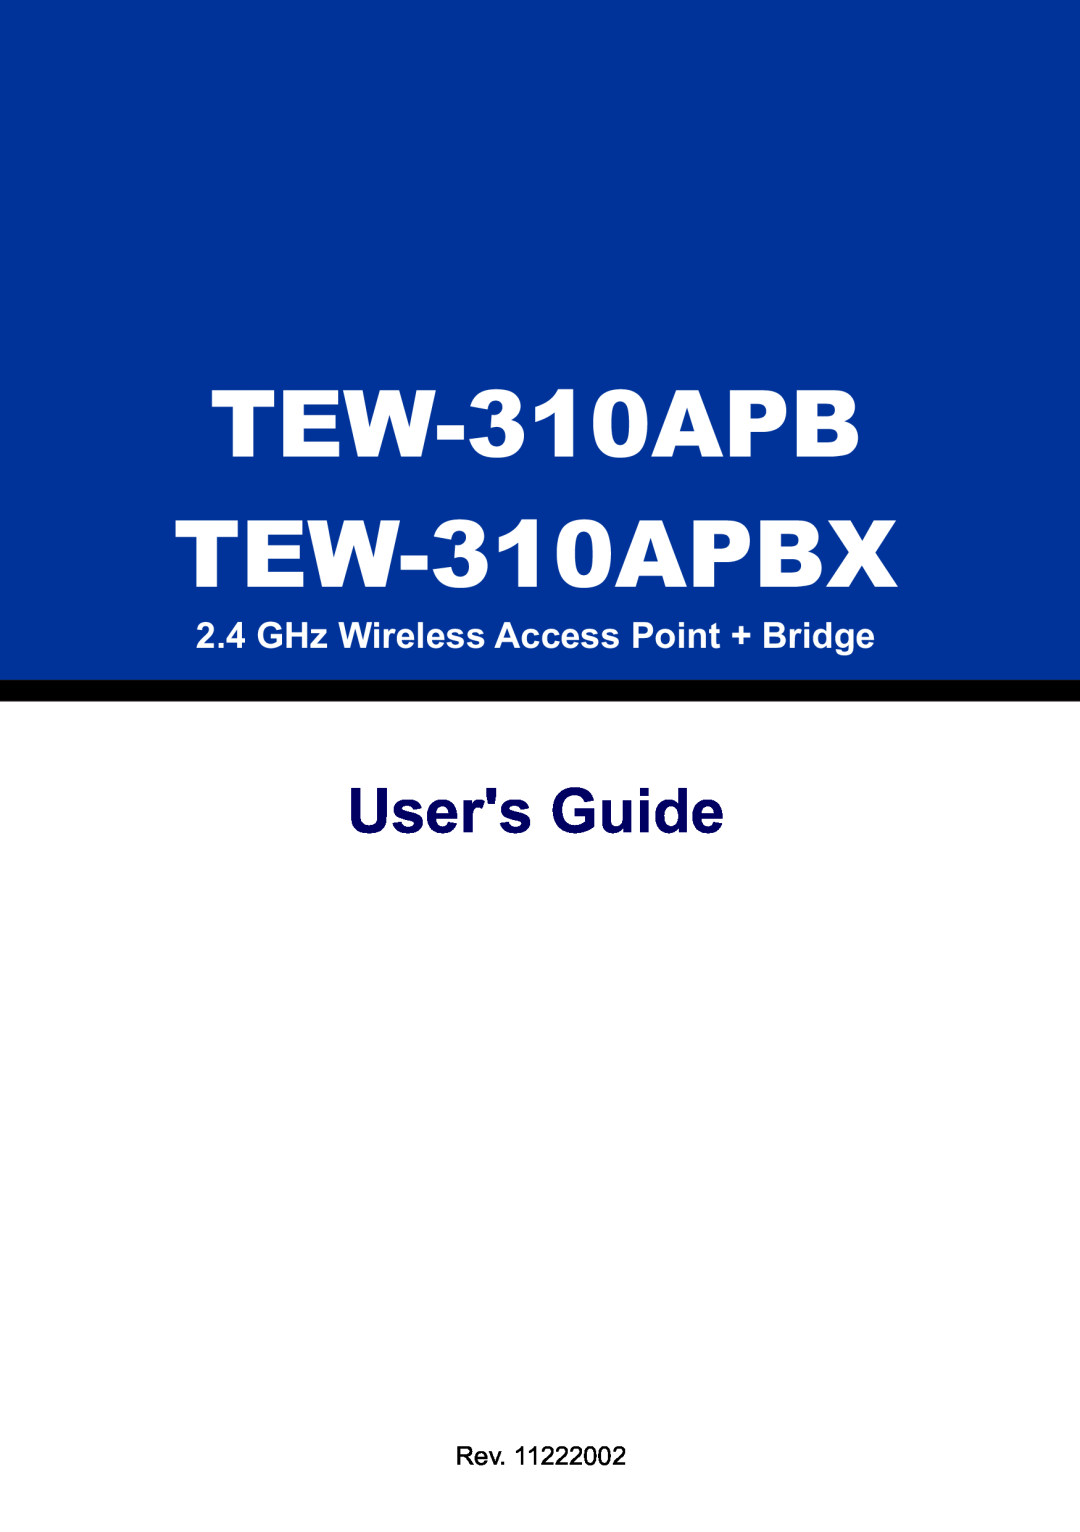 TRENDnet manual TEW-310APB TEW-310APBX, Users Guide, GHz Wireless Access Point + Bridge 